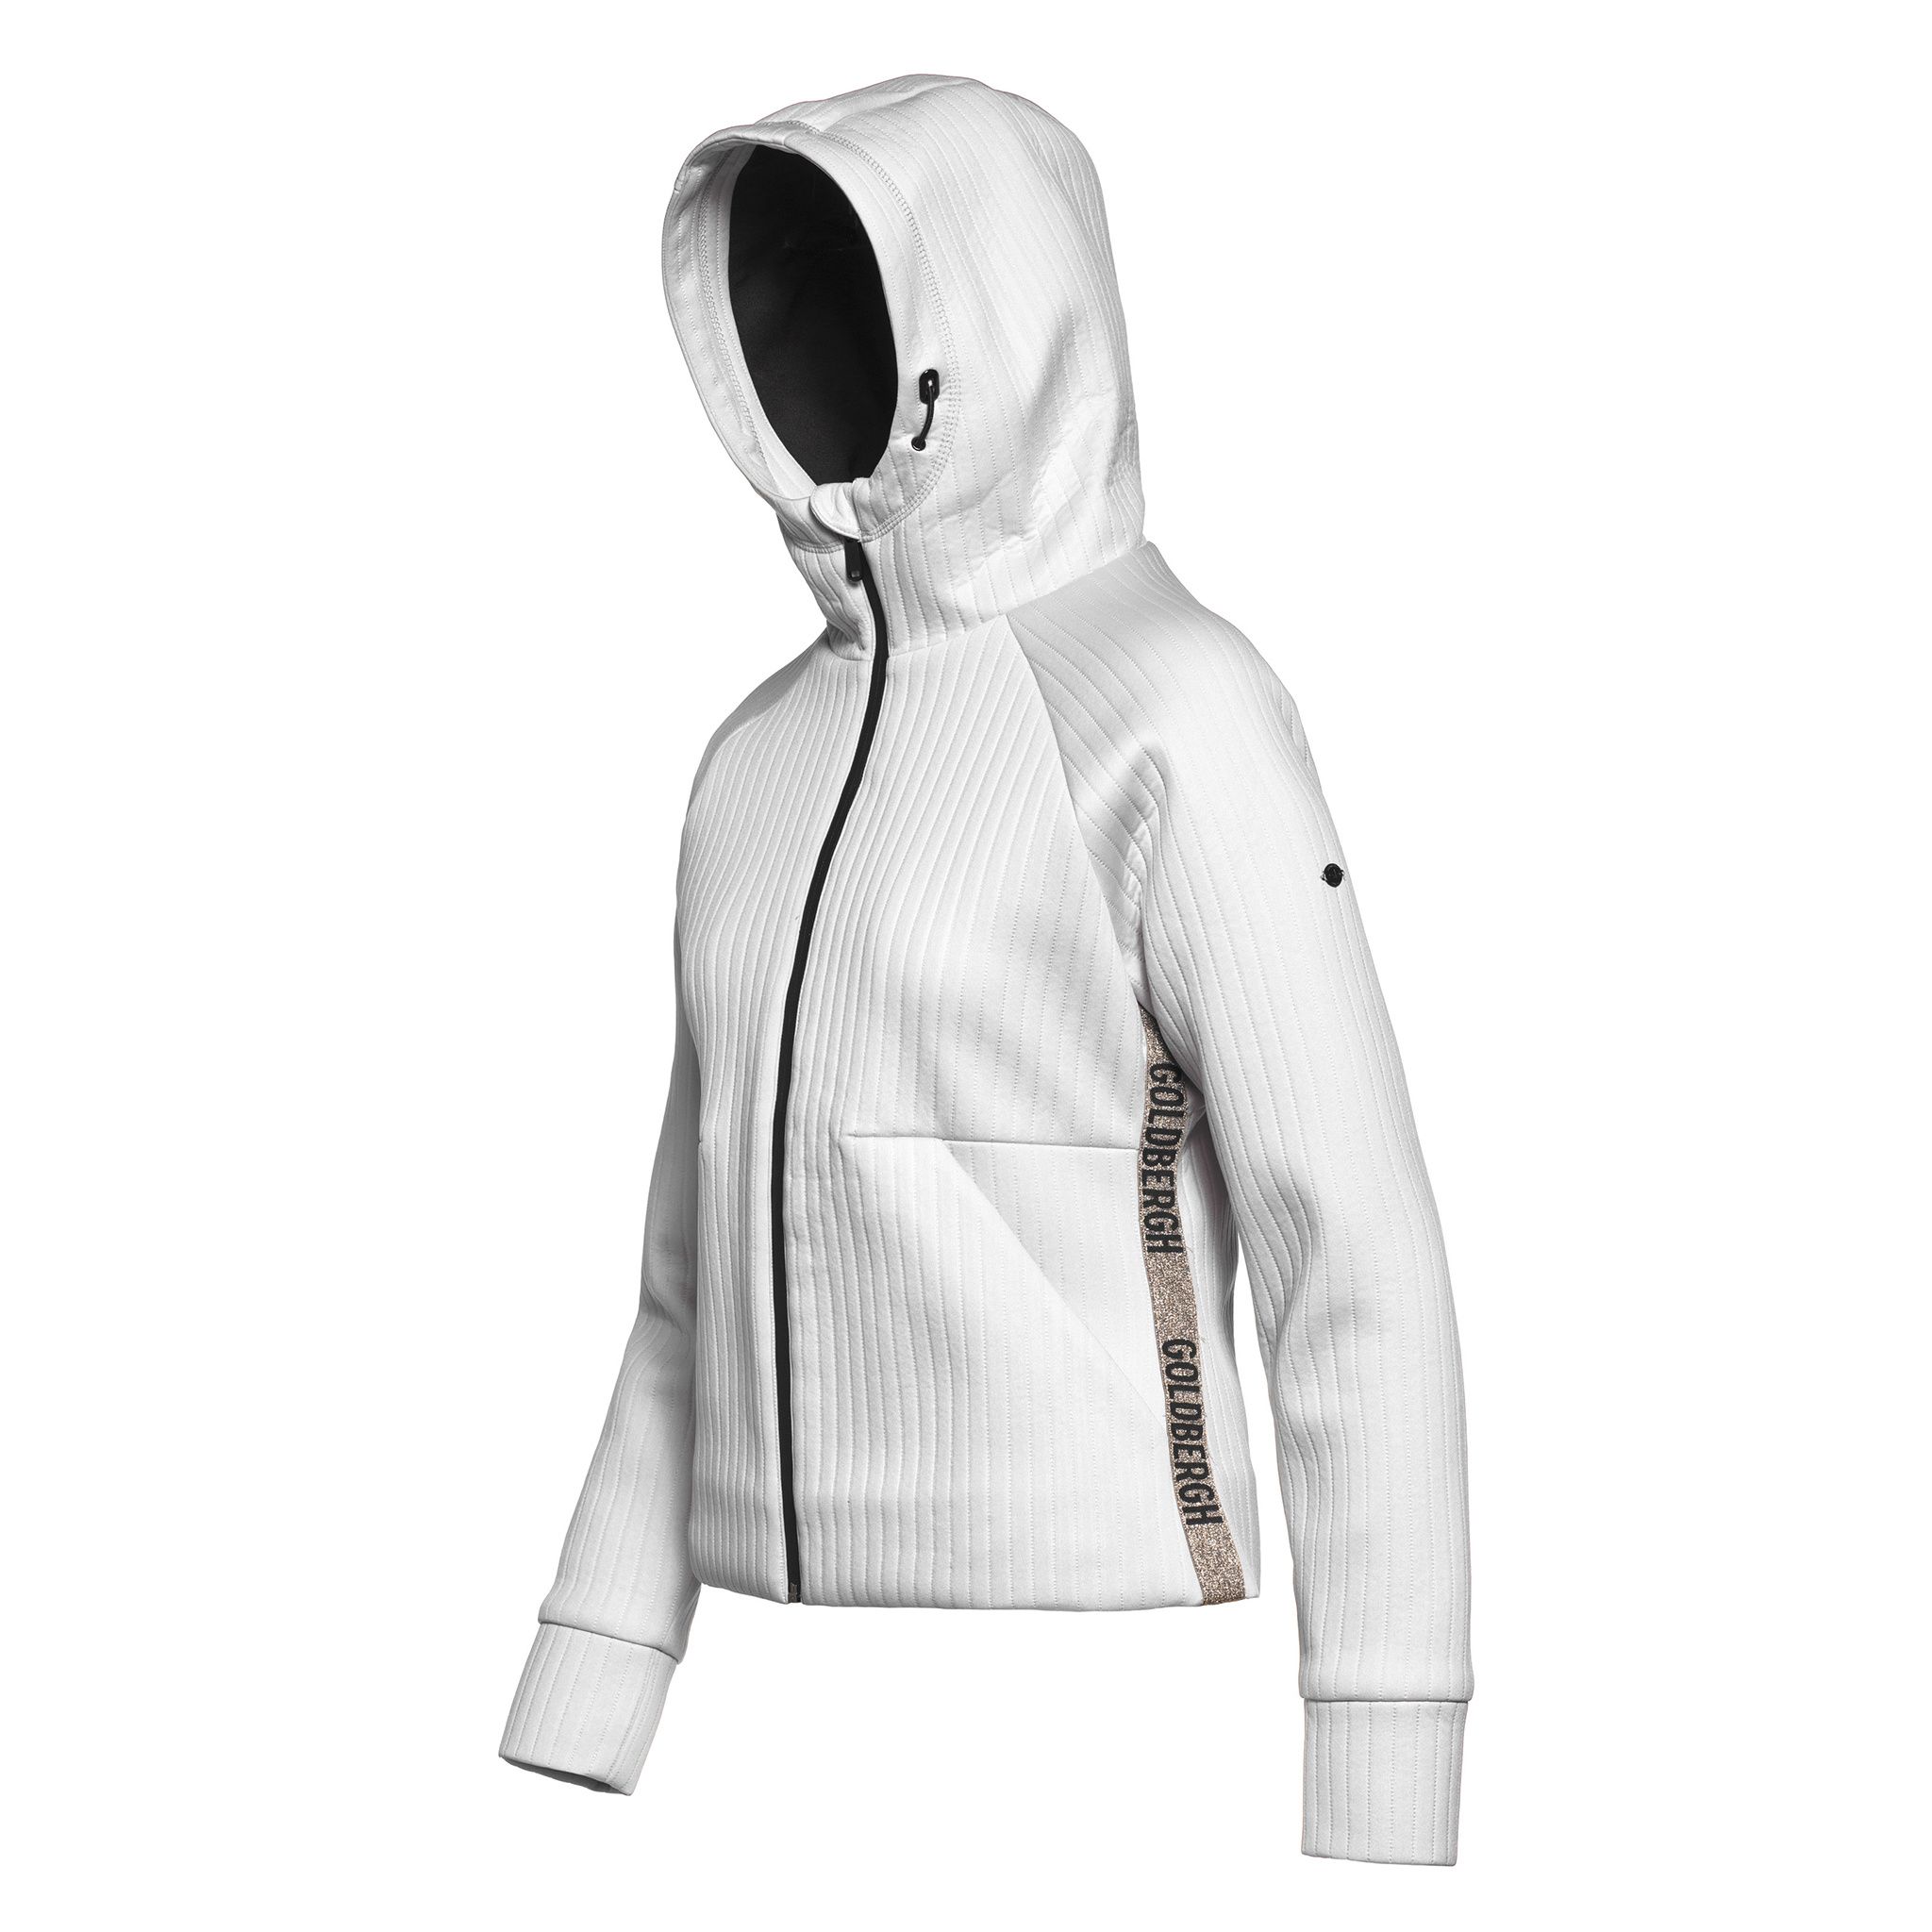 Jackets & Vests -  goldbergh UFITA hooded jacket